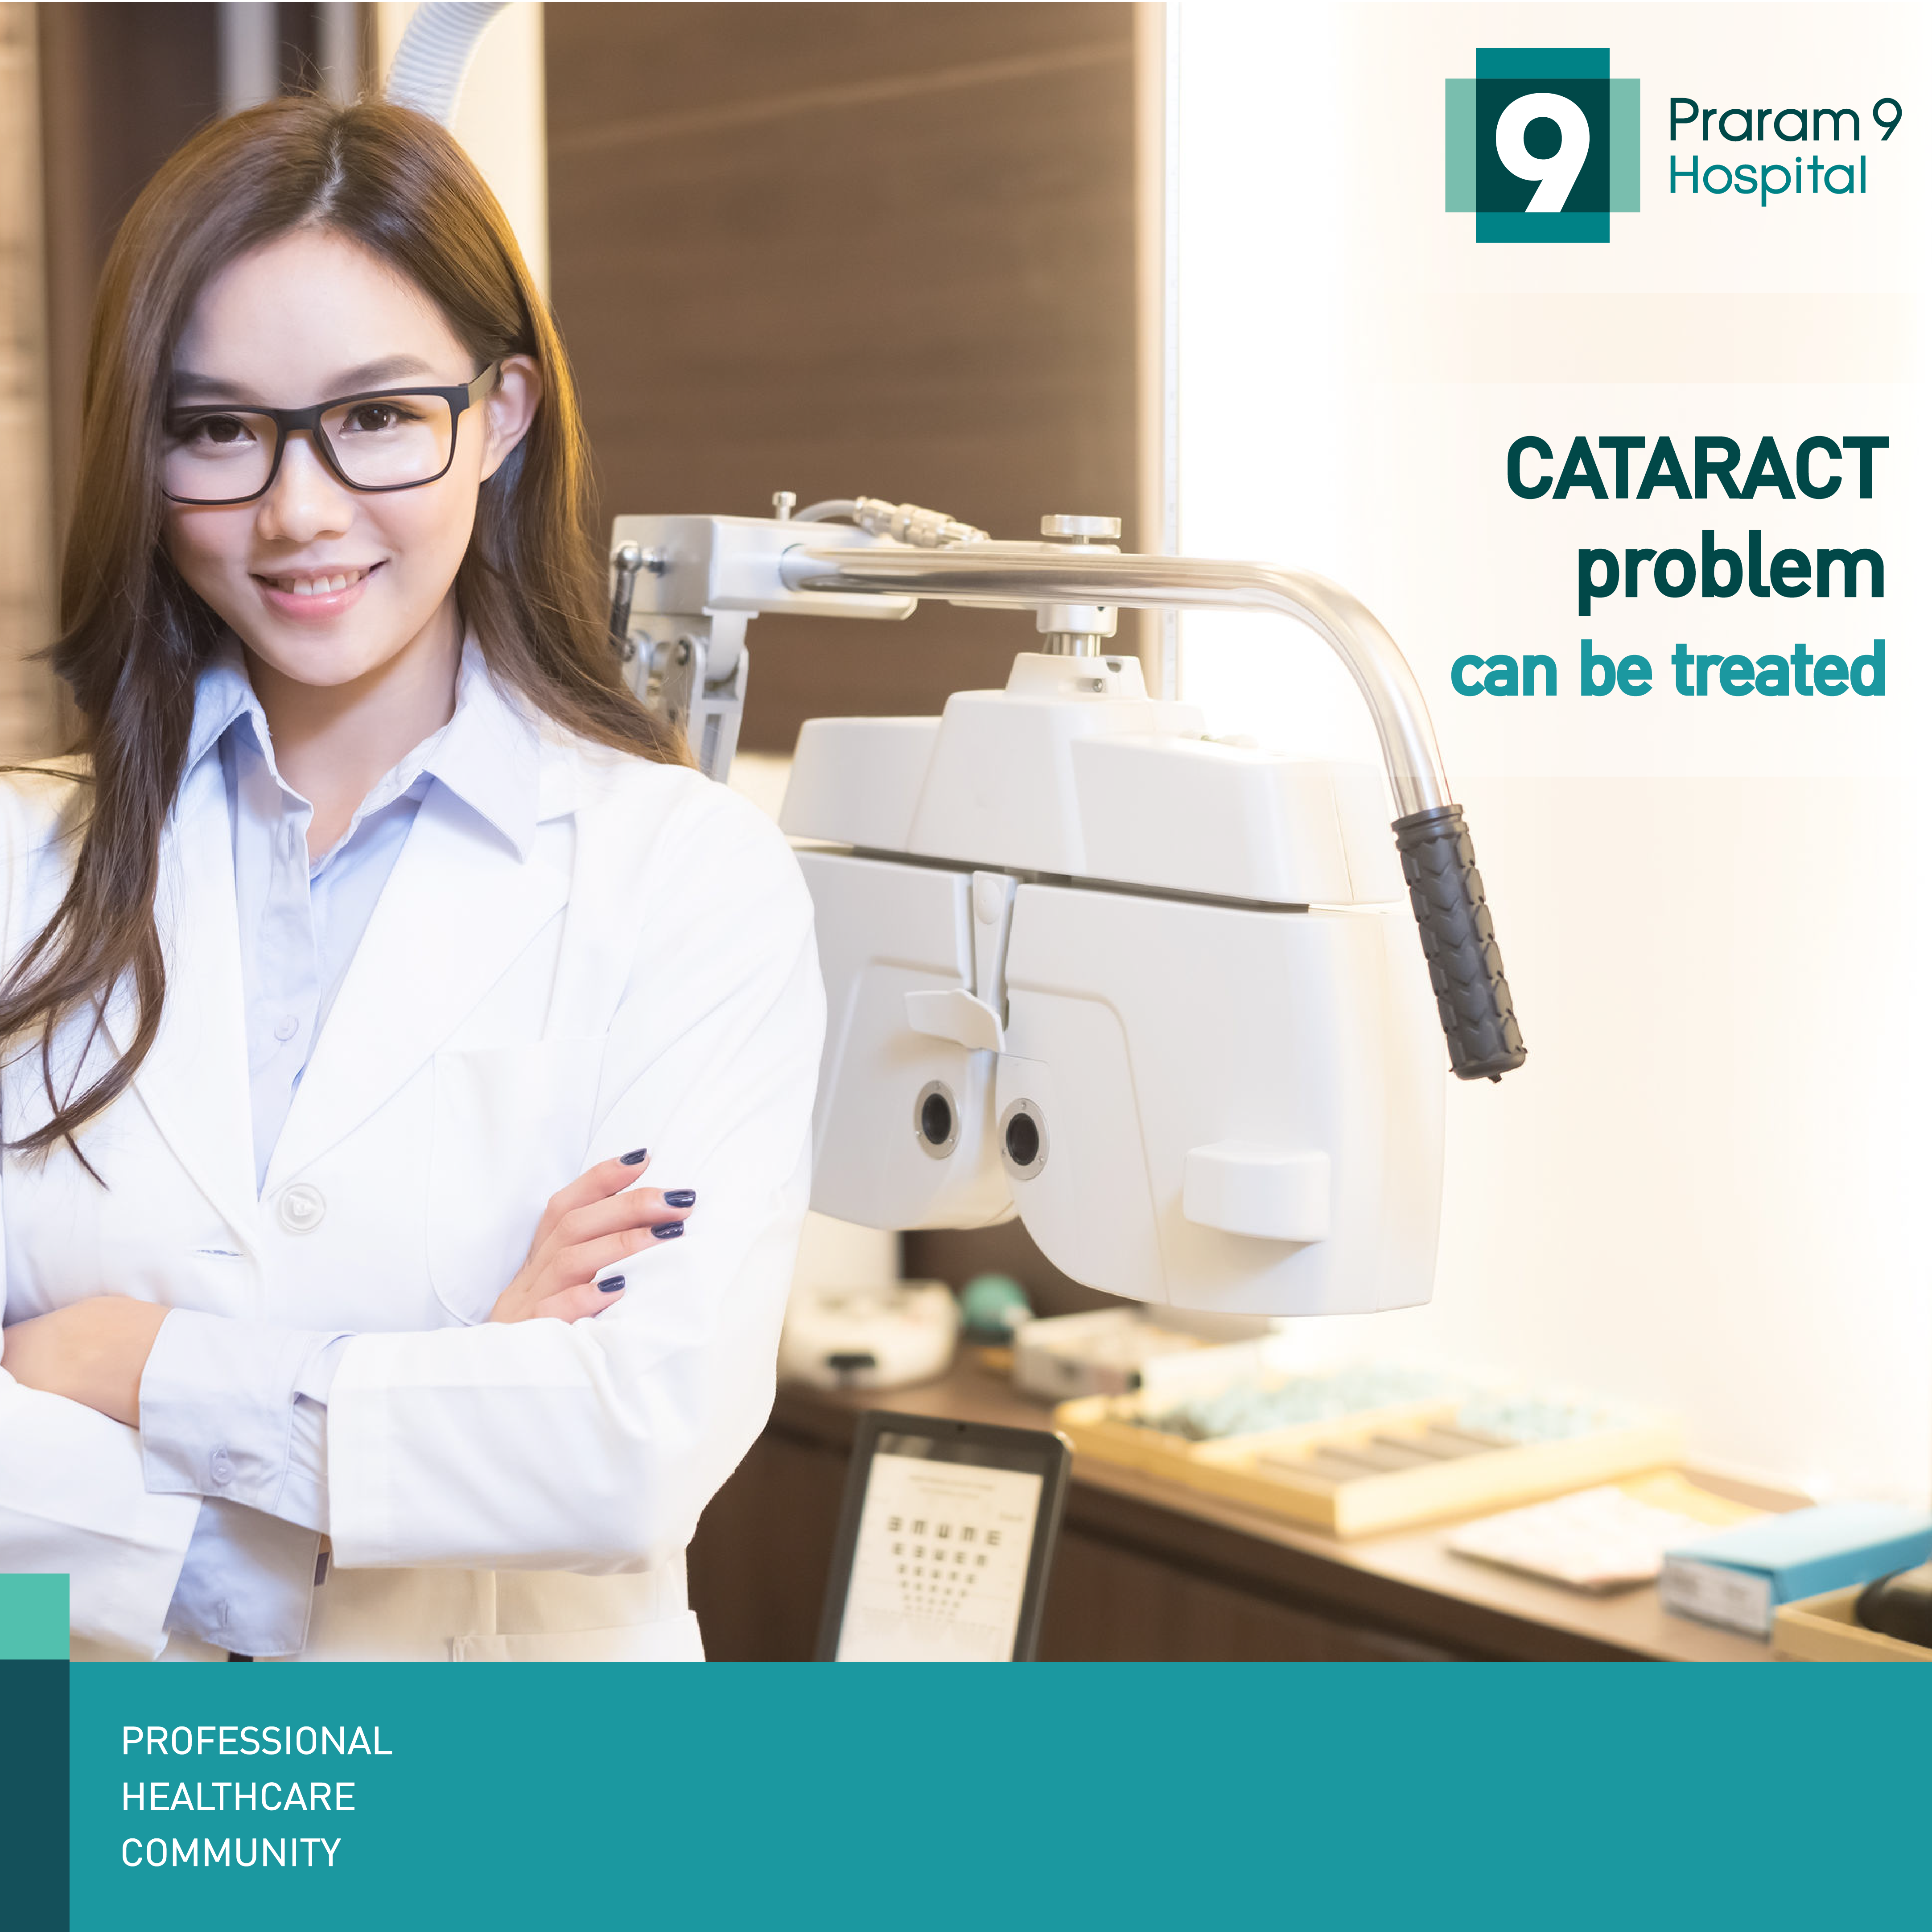 Cataract problem